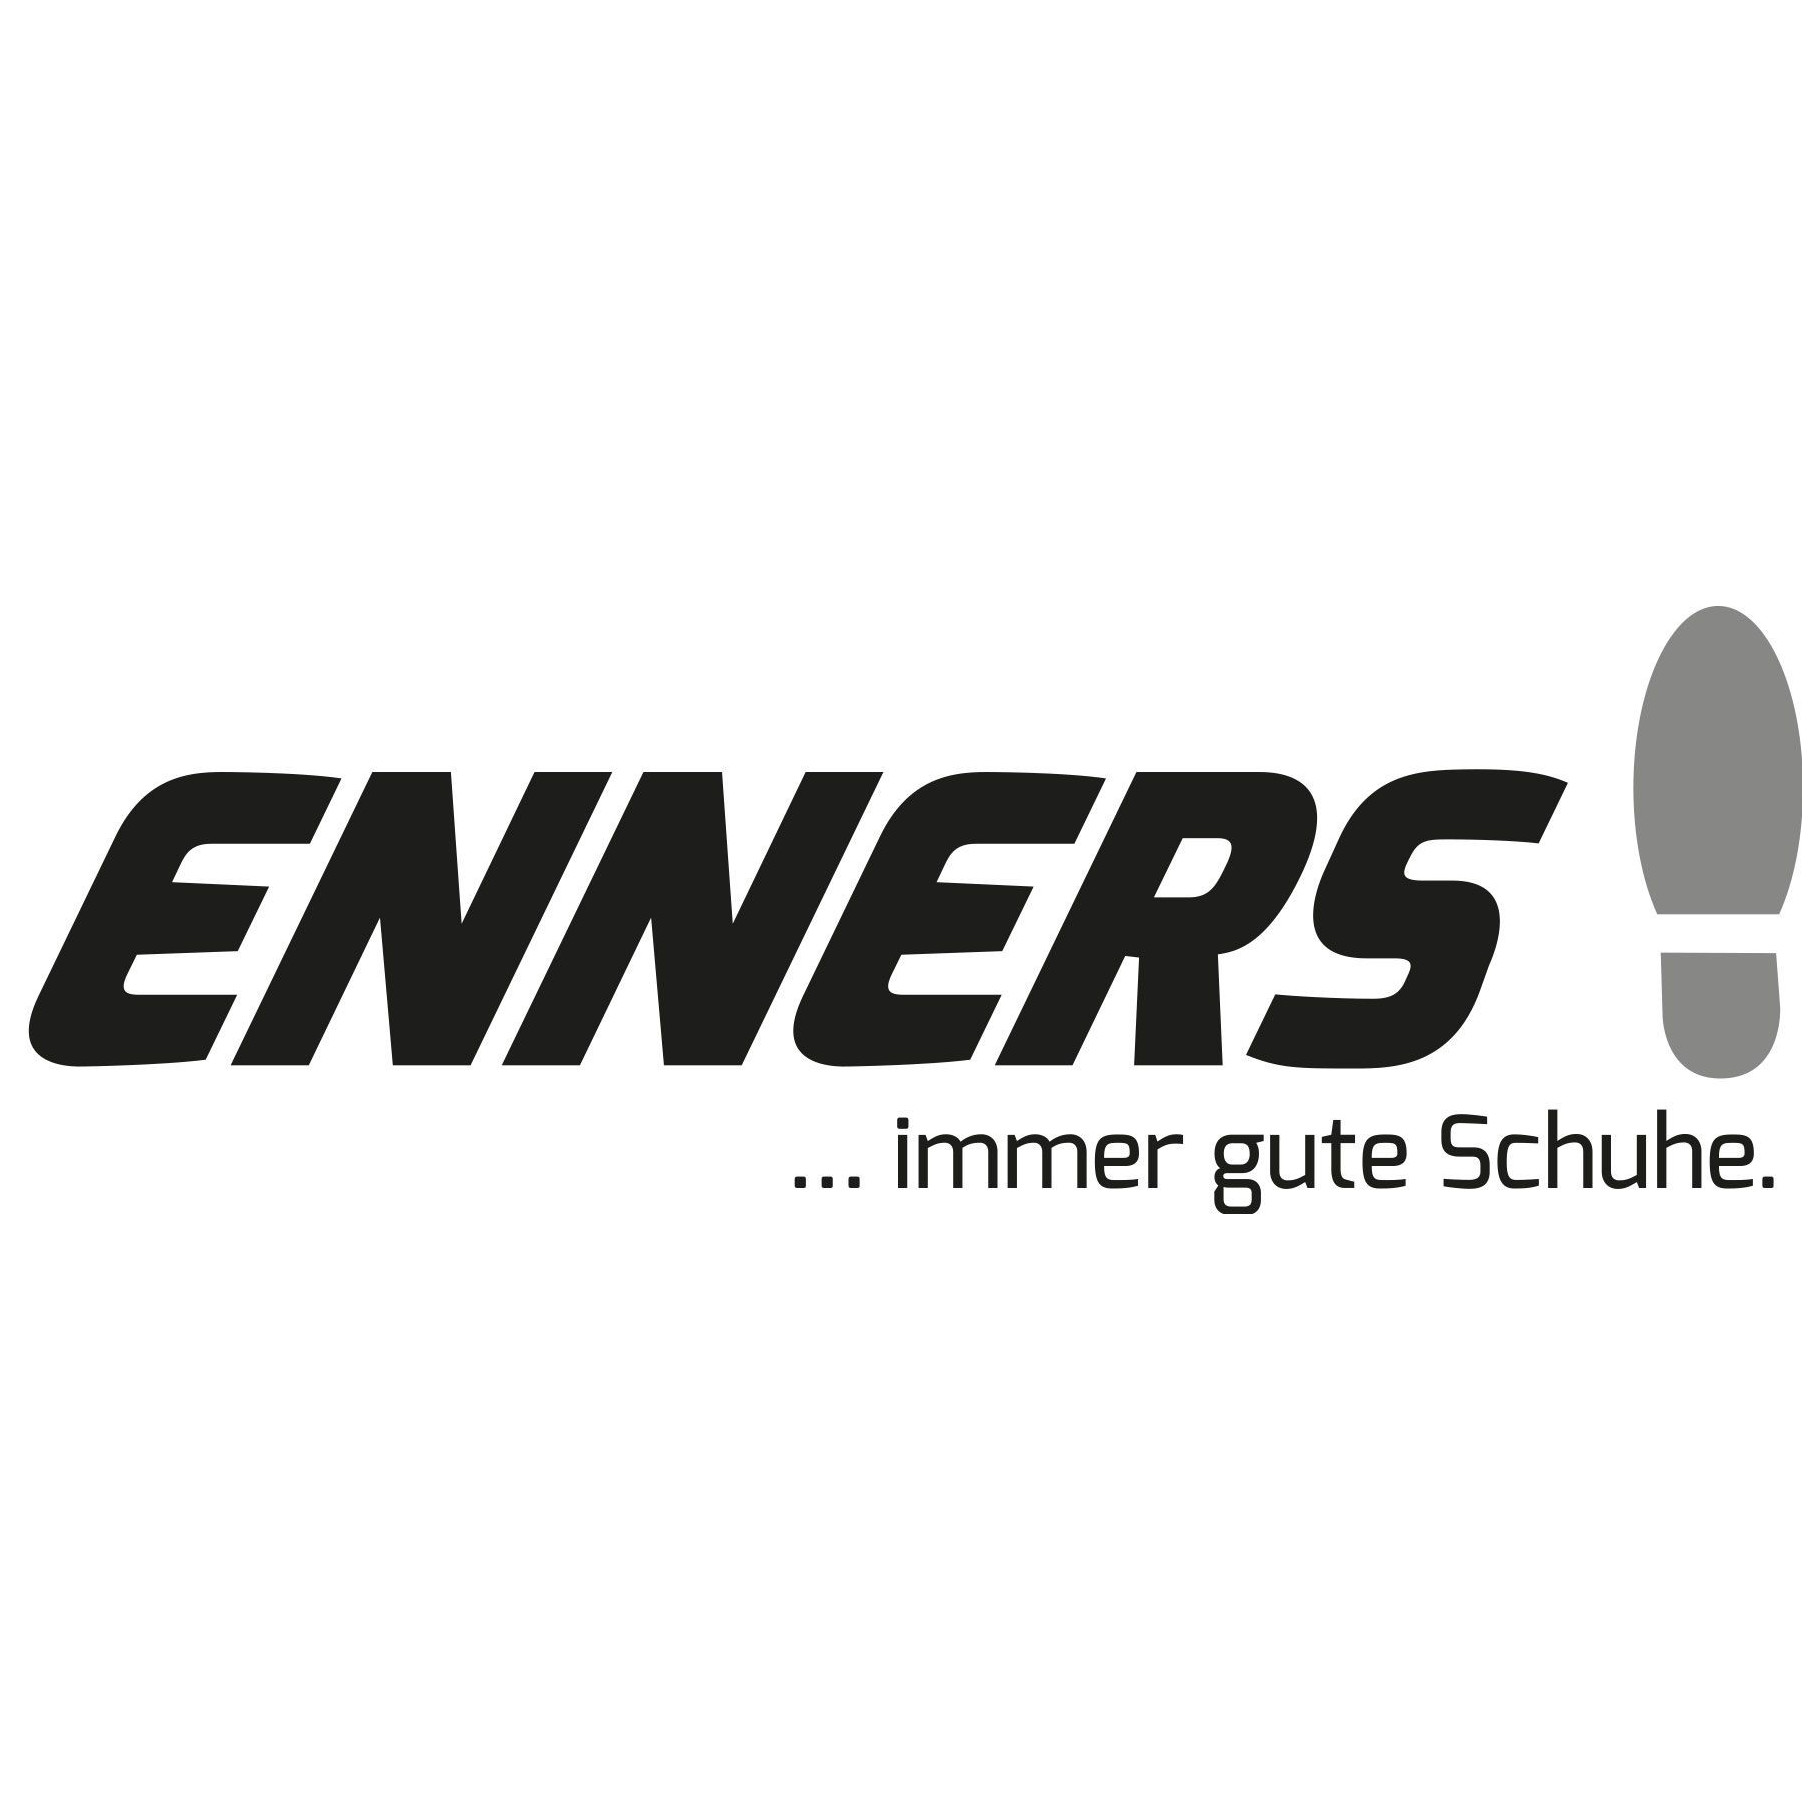 Enners Schuhhaus